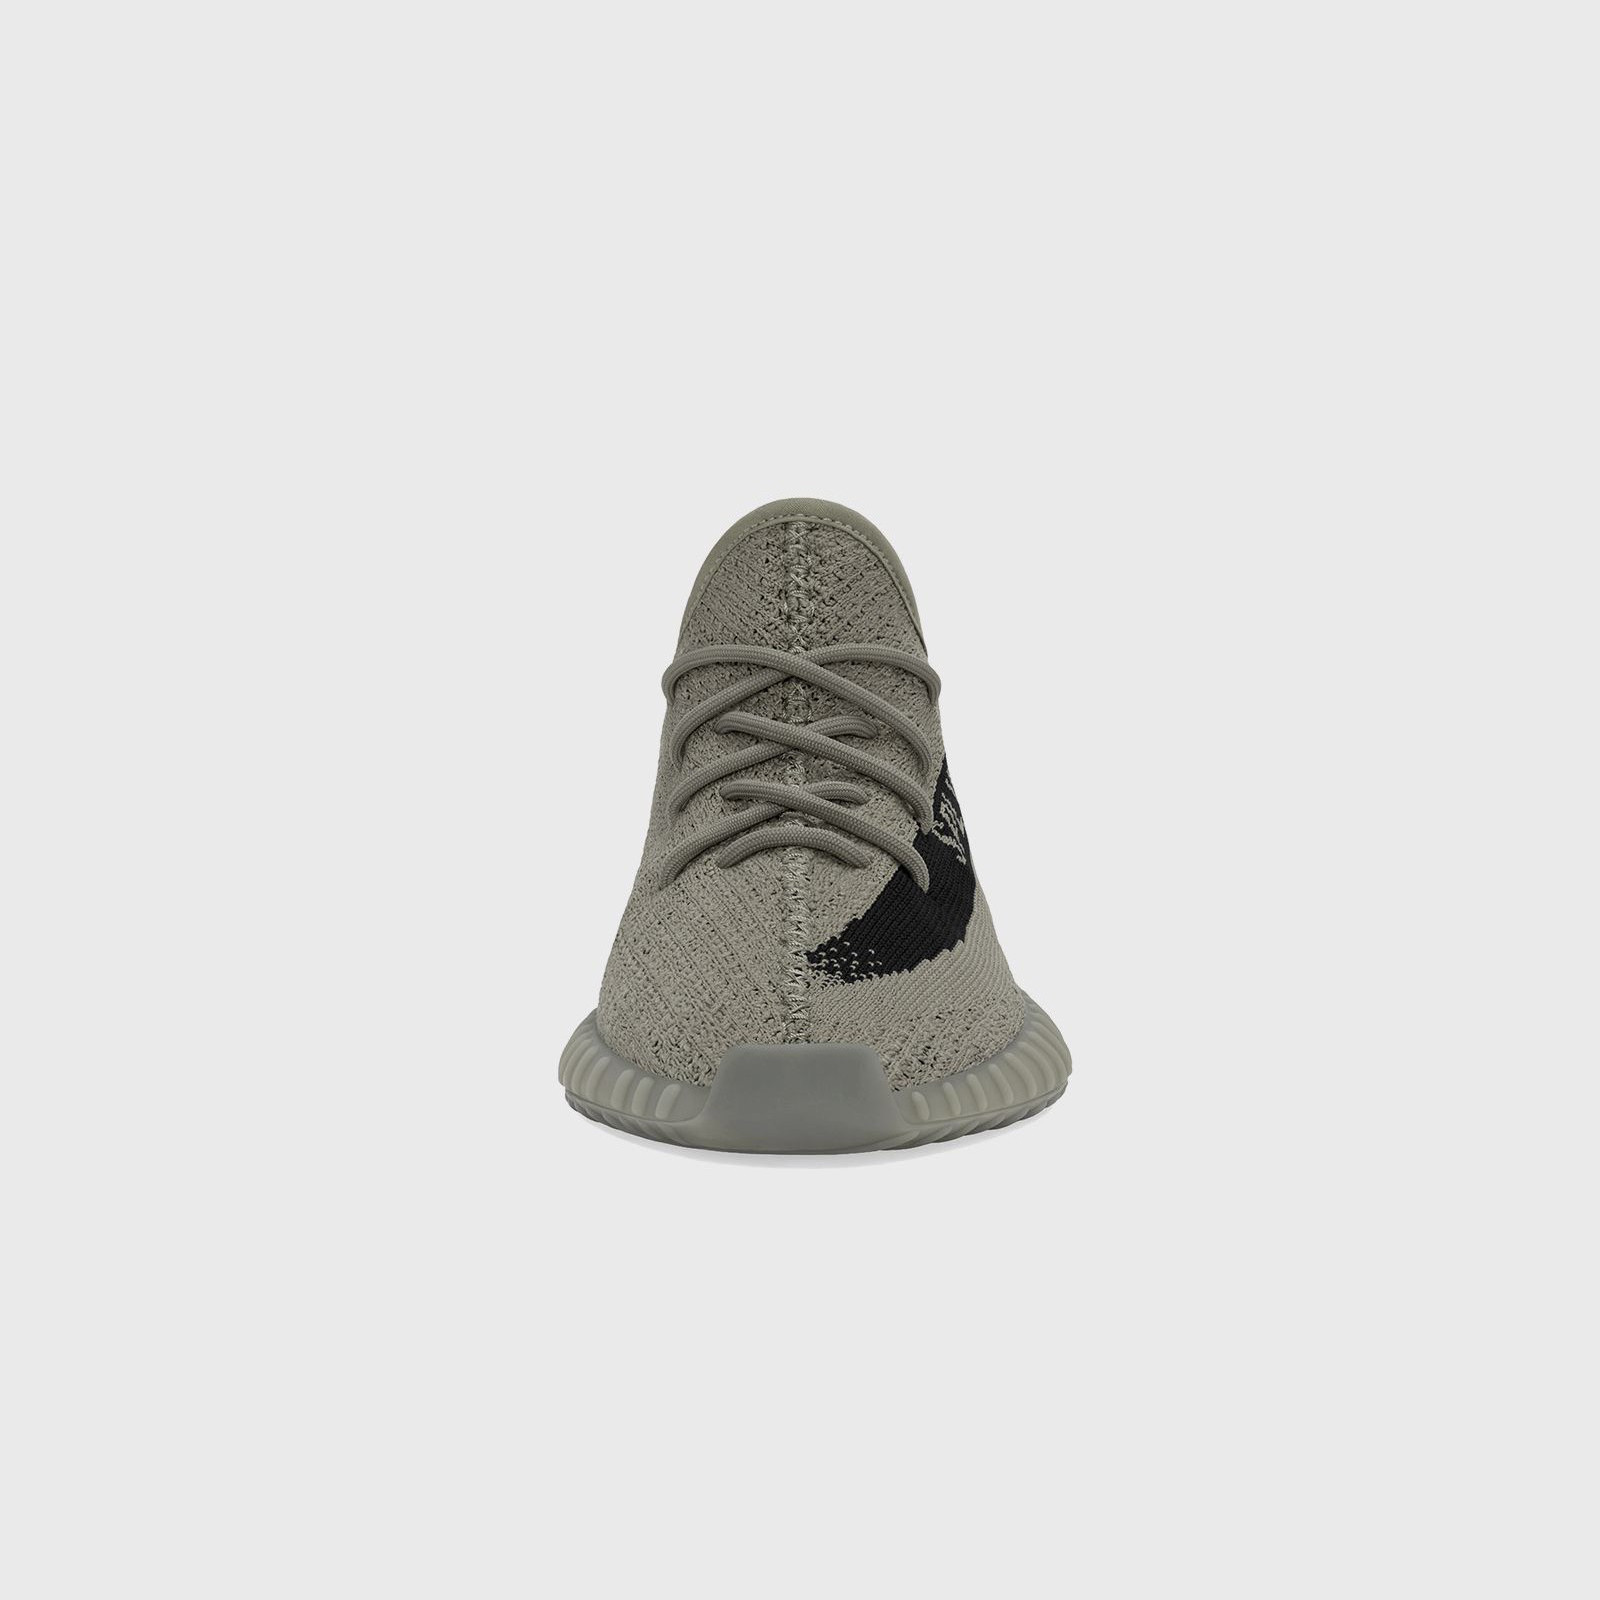 Adidas Yeezy Boost 350 V2
« Granite »